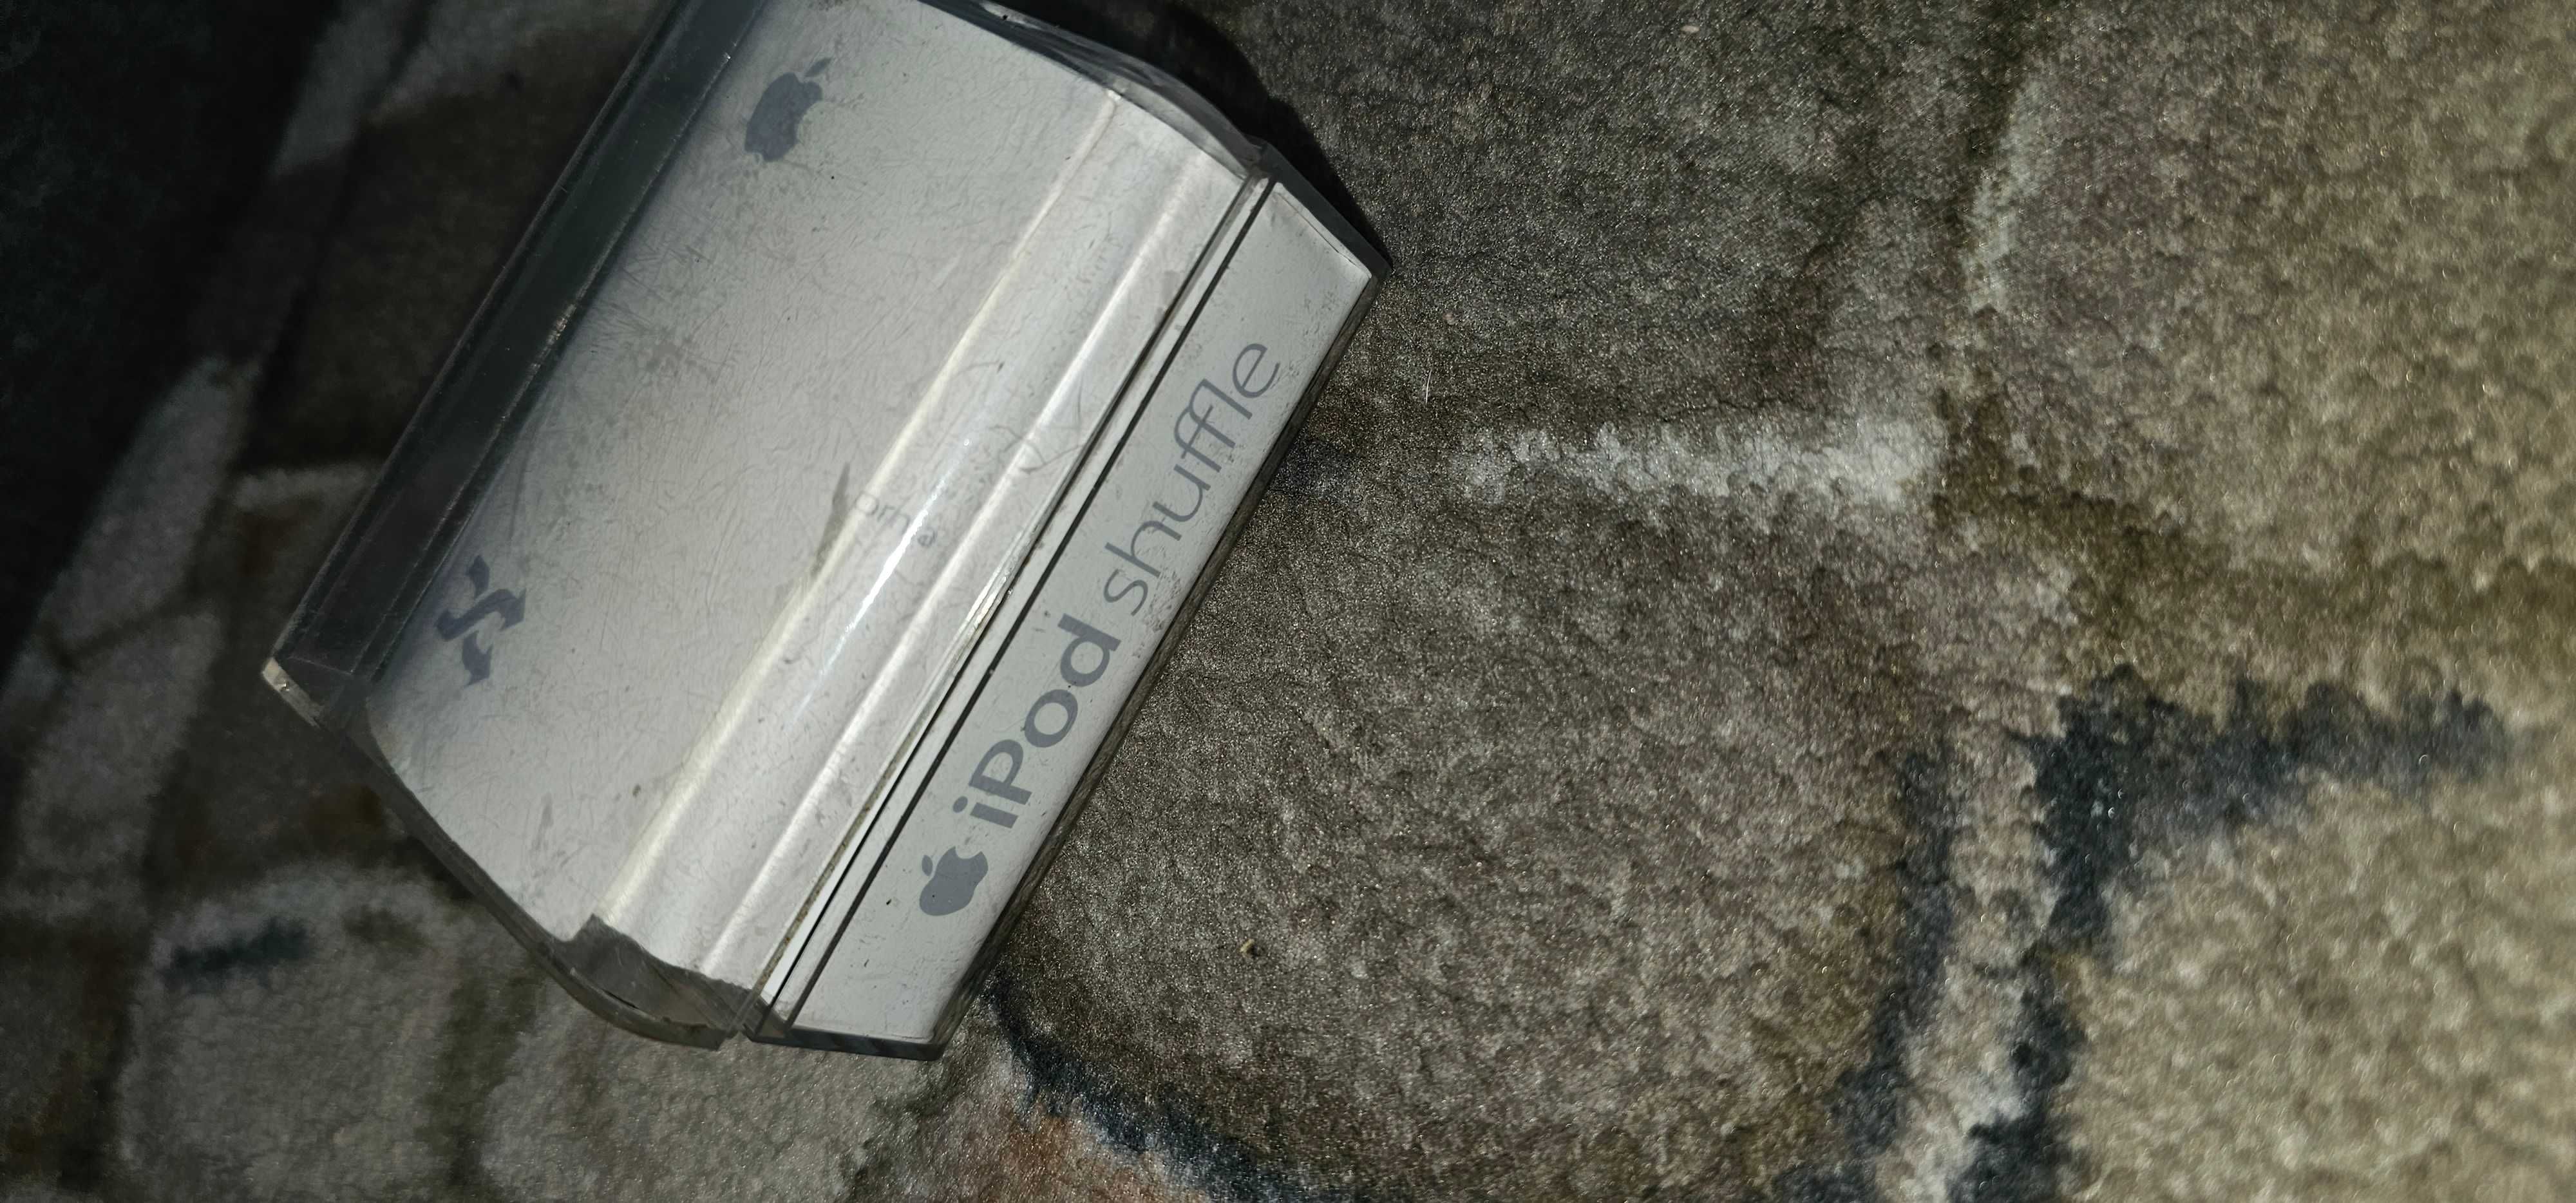 Apple iPod Shuffle 2nd Generation Gen 2GB Silver becks